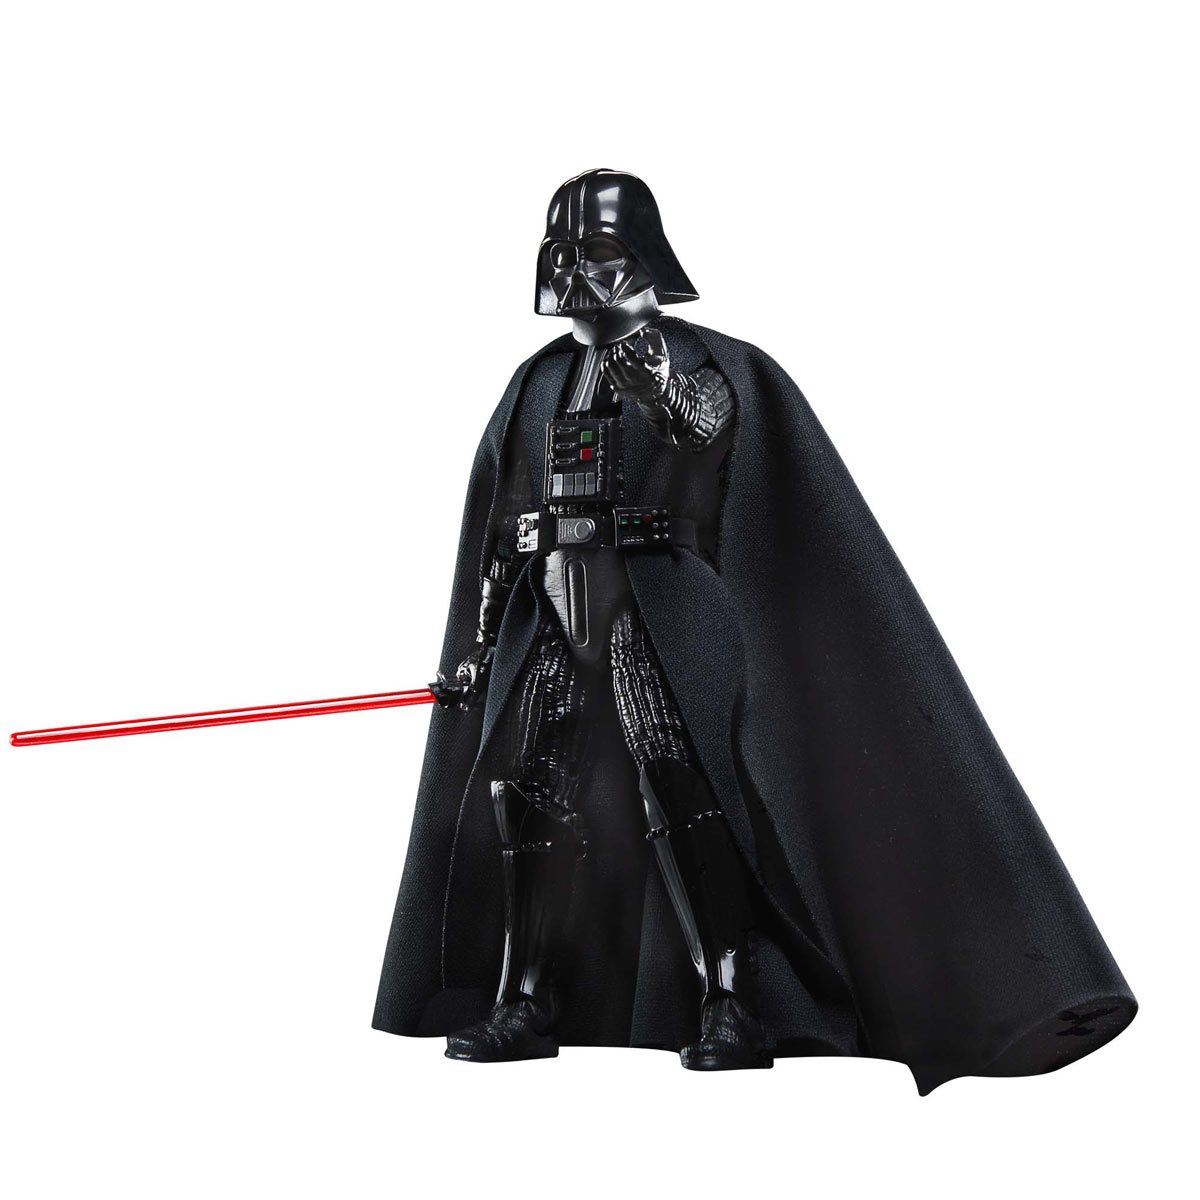 Star Wars The Black Series Darth Vader (A New Hope) 15cm G03645L00 5010996243768